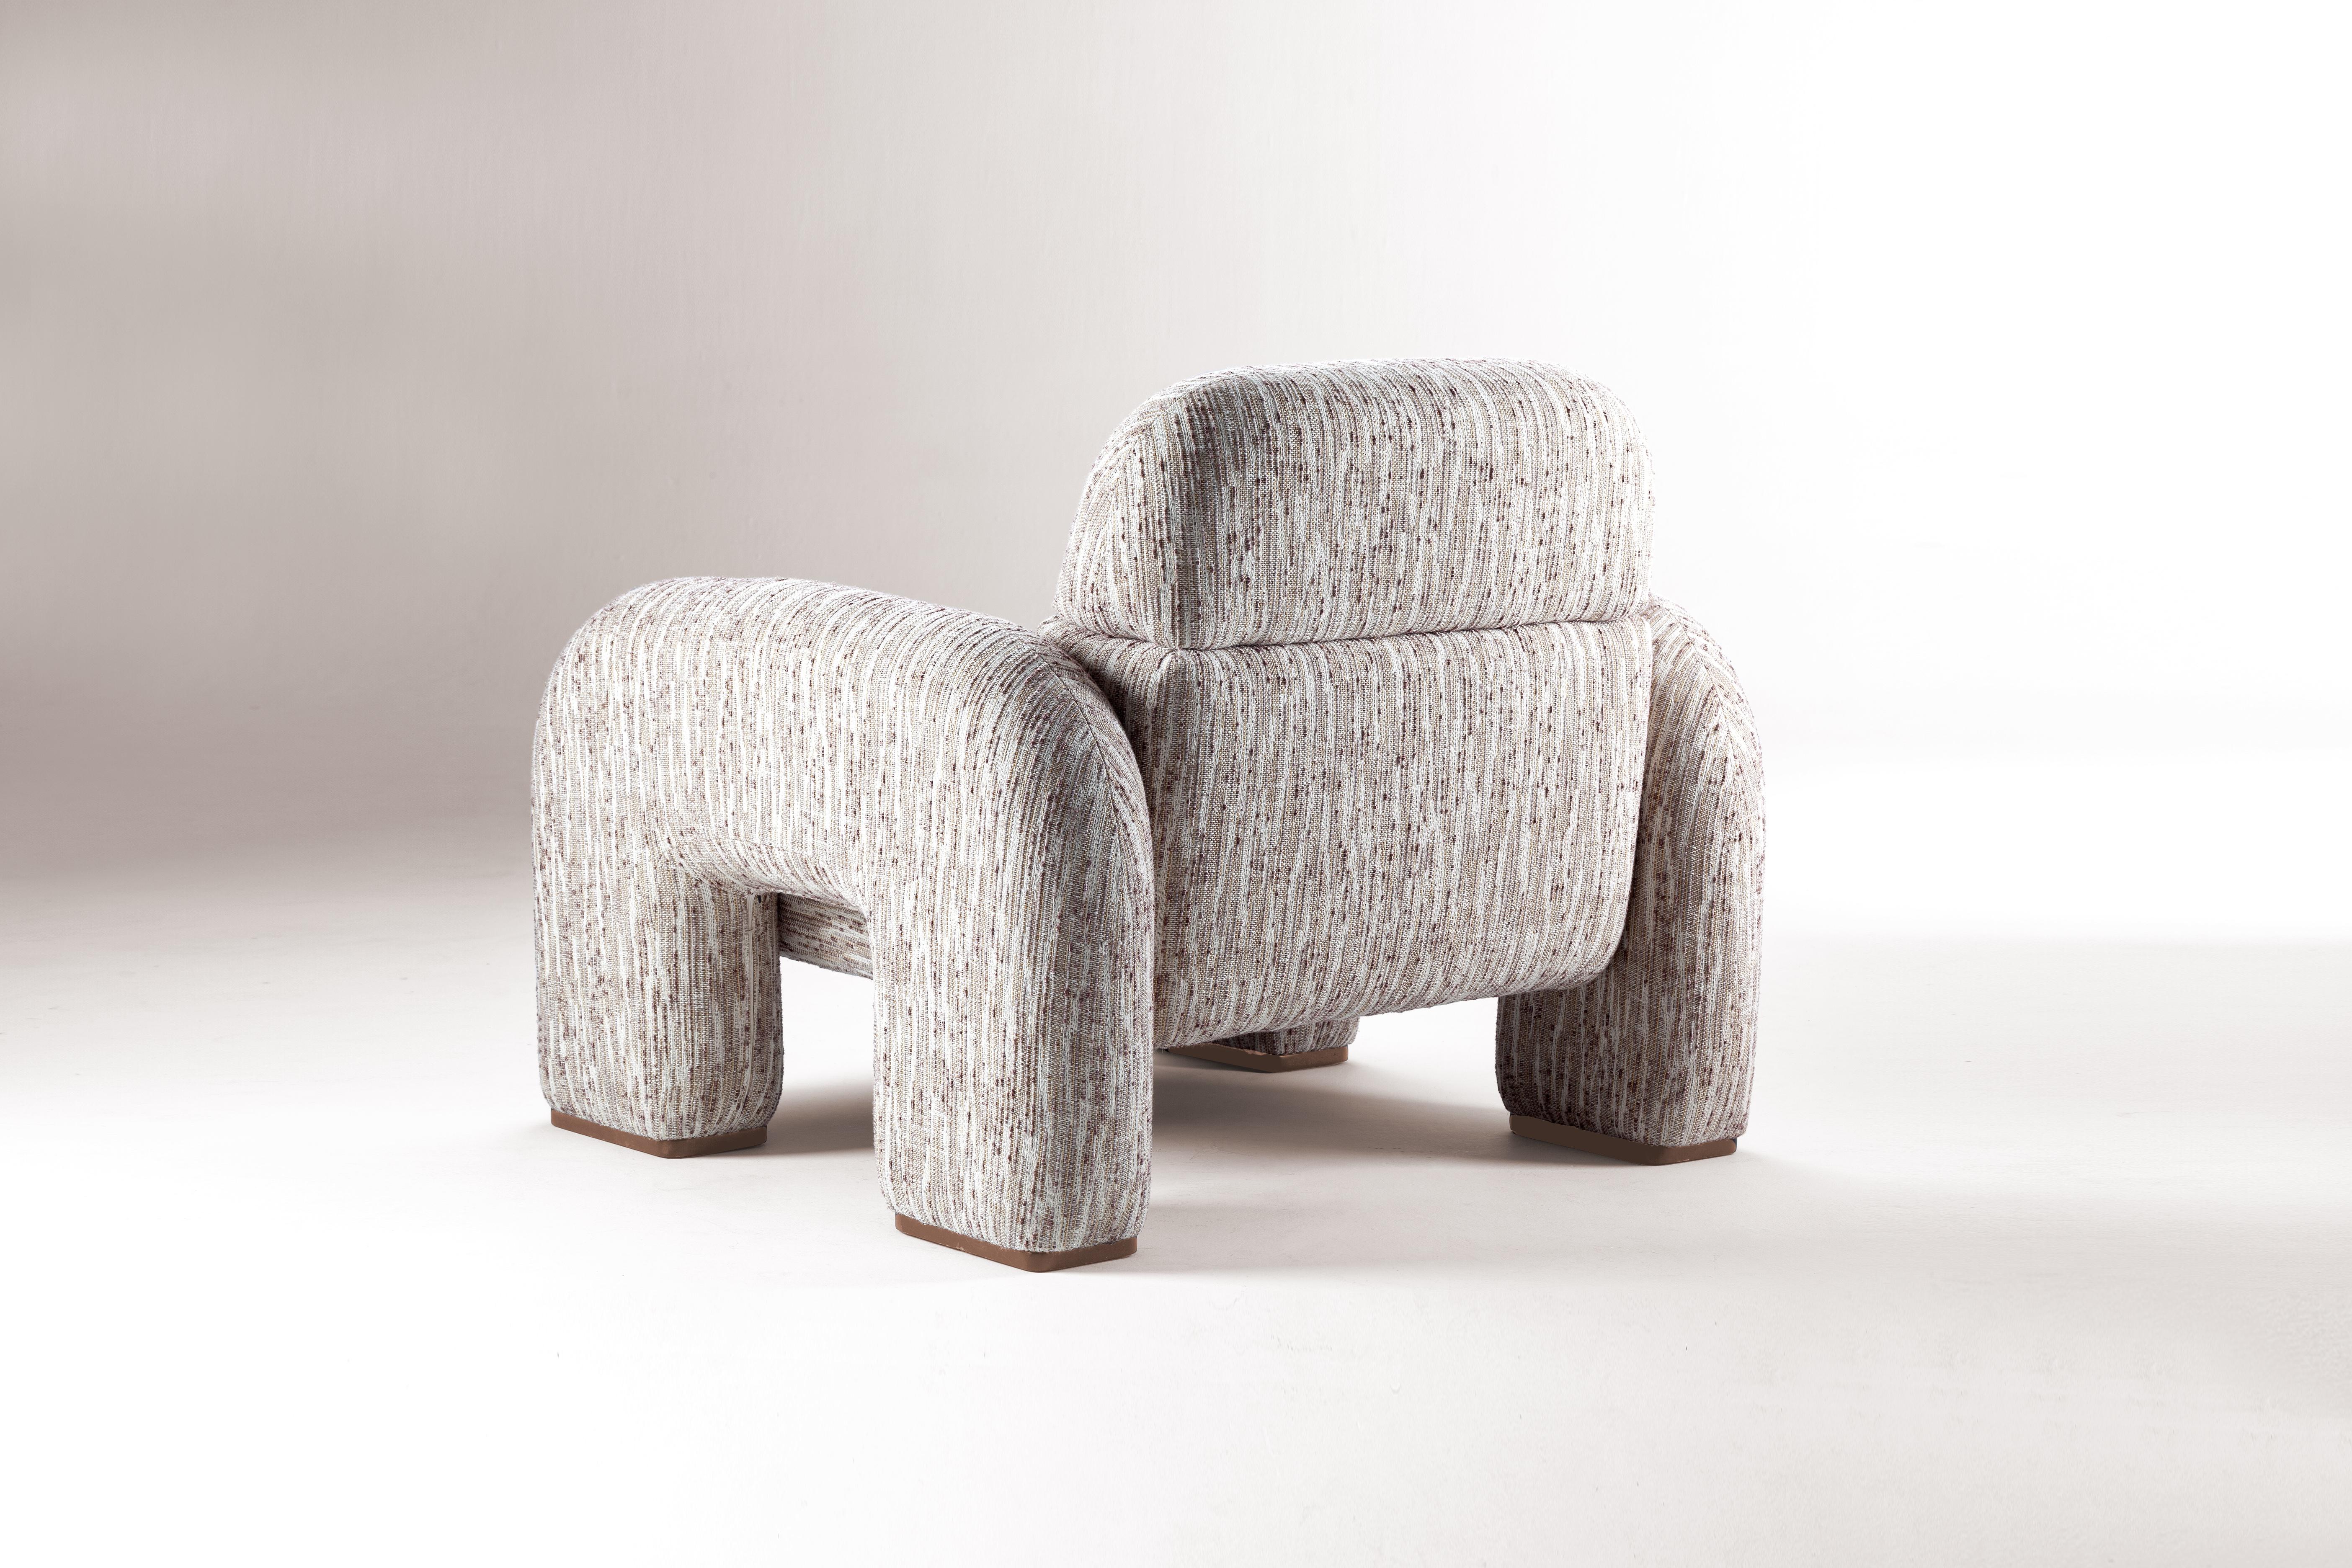 Portuguese DOOQ! NEW! Organic Modernist Vertigo Armchair in Beige and Grey Fabric For Sale